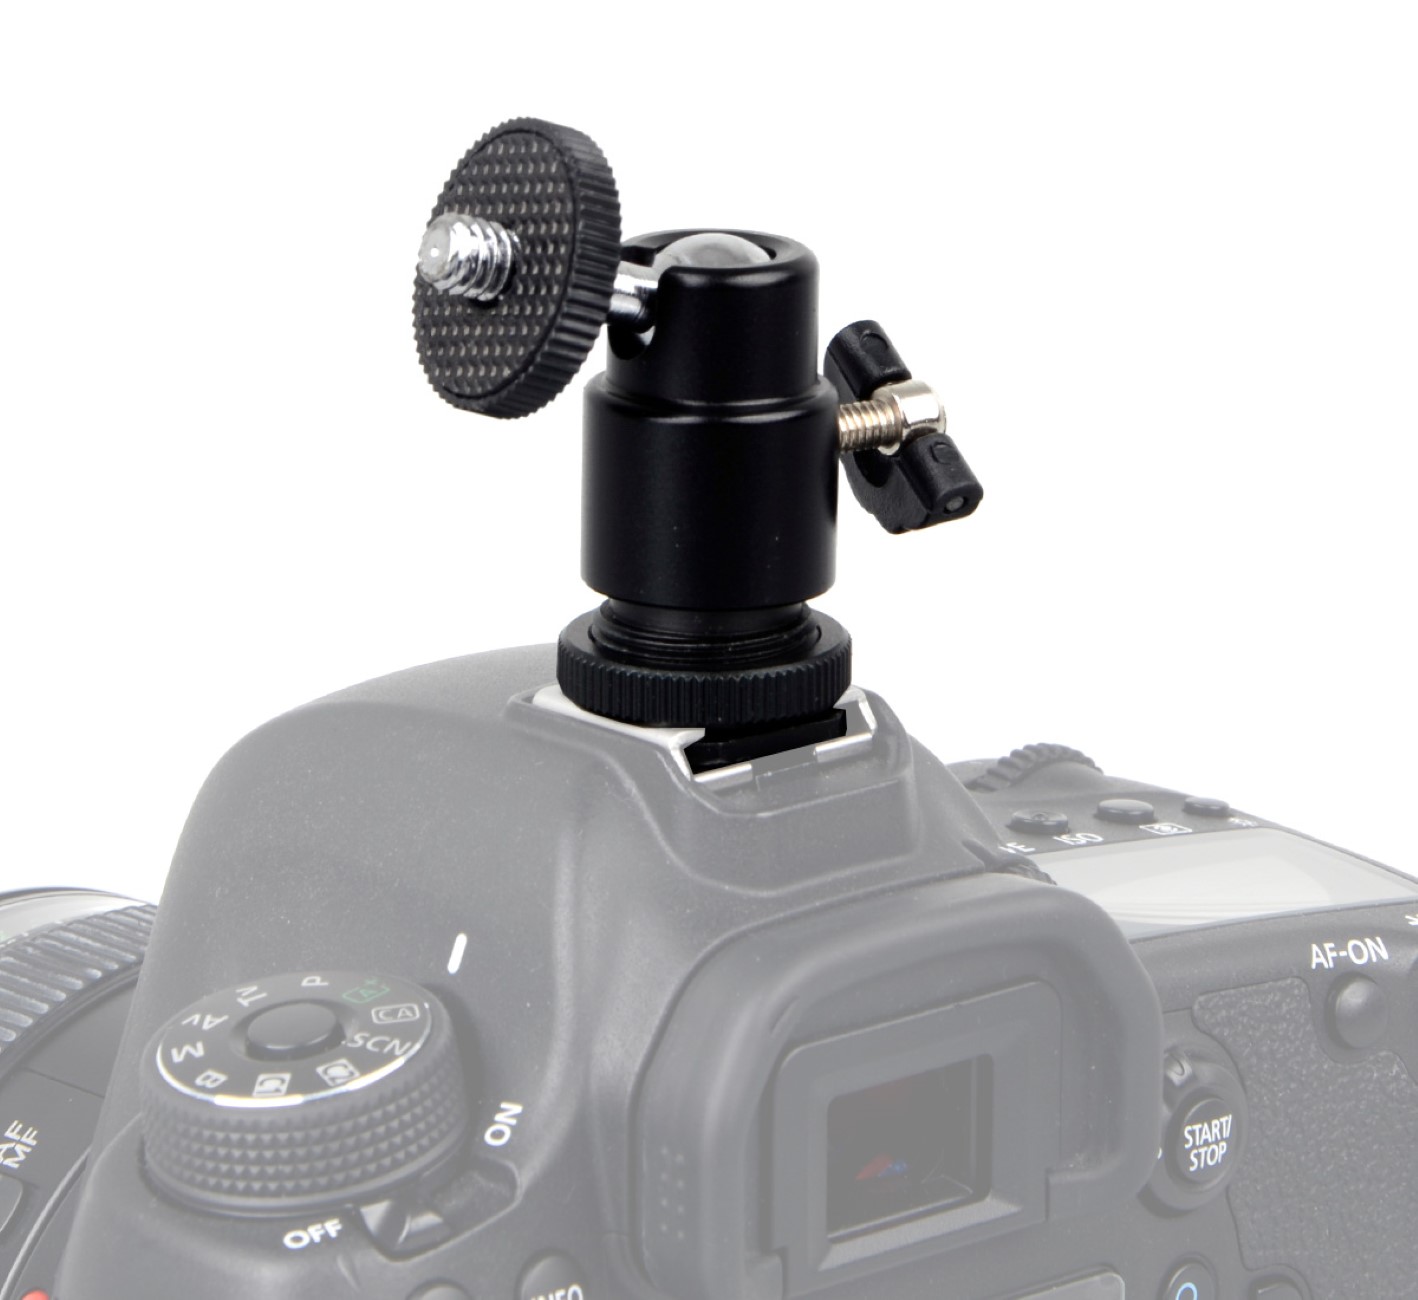 Mini Kugelkopf für Kamera-Blitzschuh